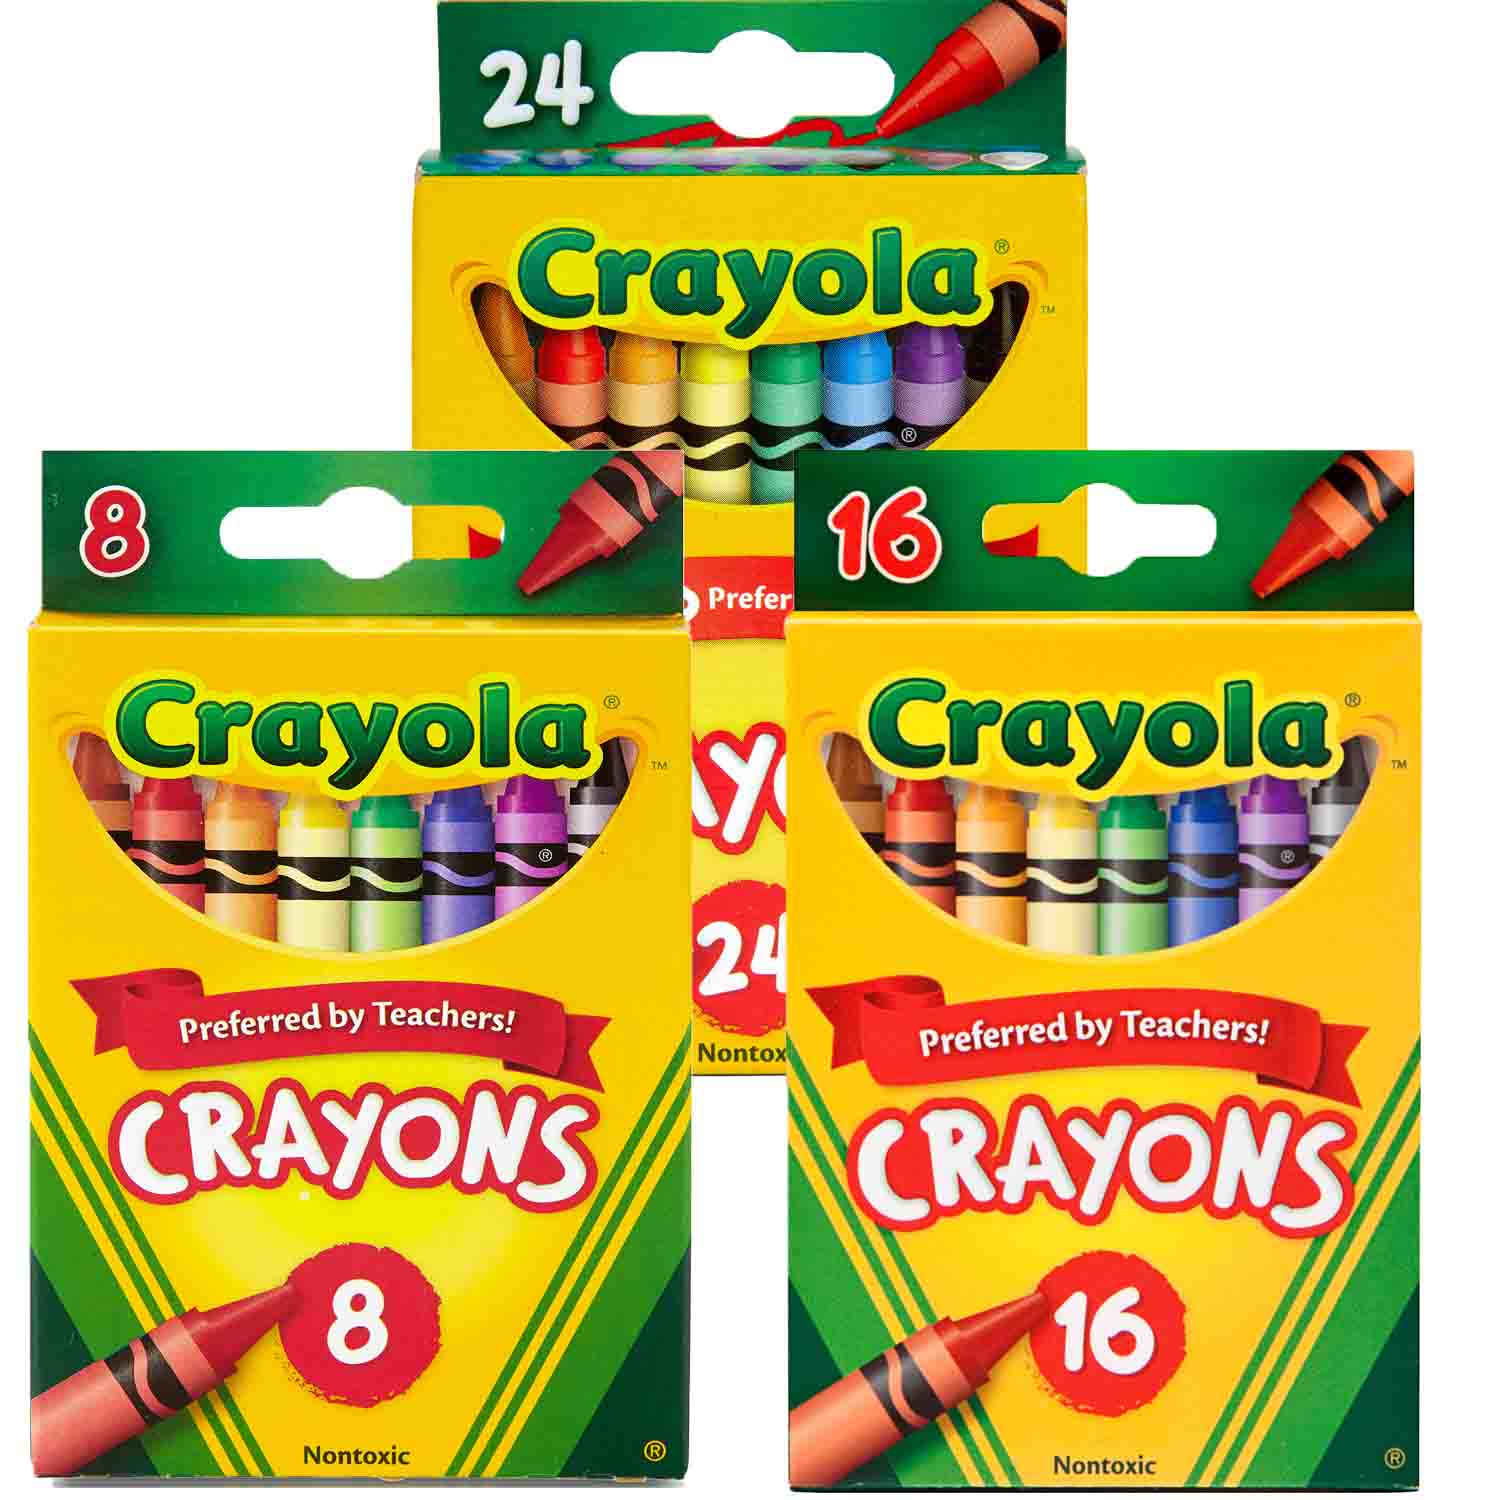 Standard Crayons